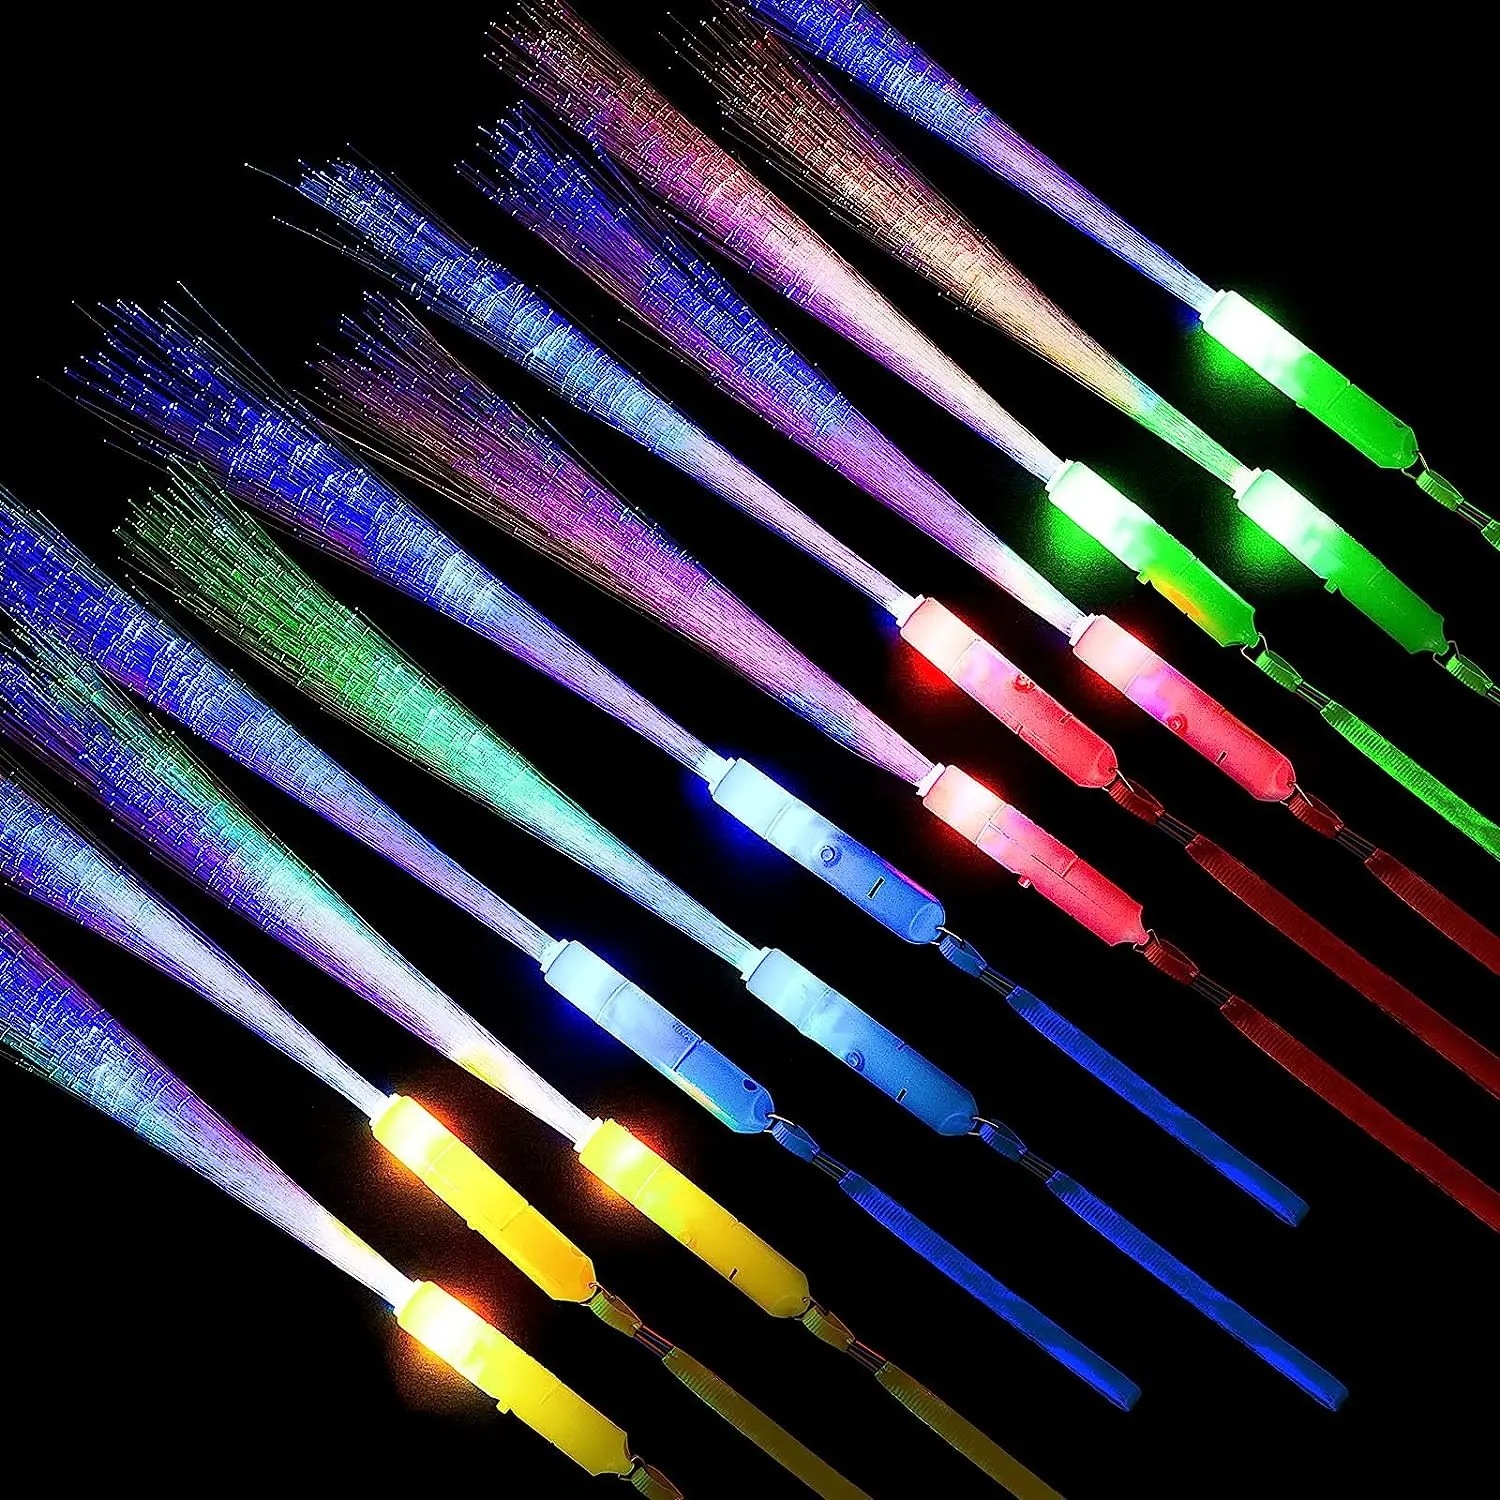 

YSJ Glow Fiber Wands Sticks 3 Modes Colorful LED Flashing Sticks Glow Flashing Wands for Party Favors